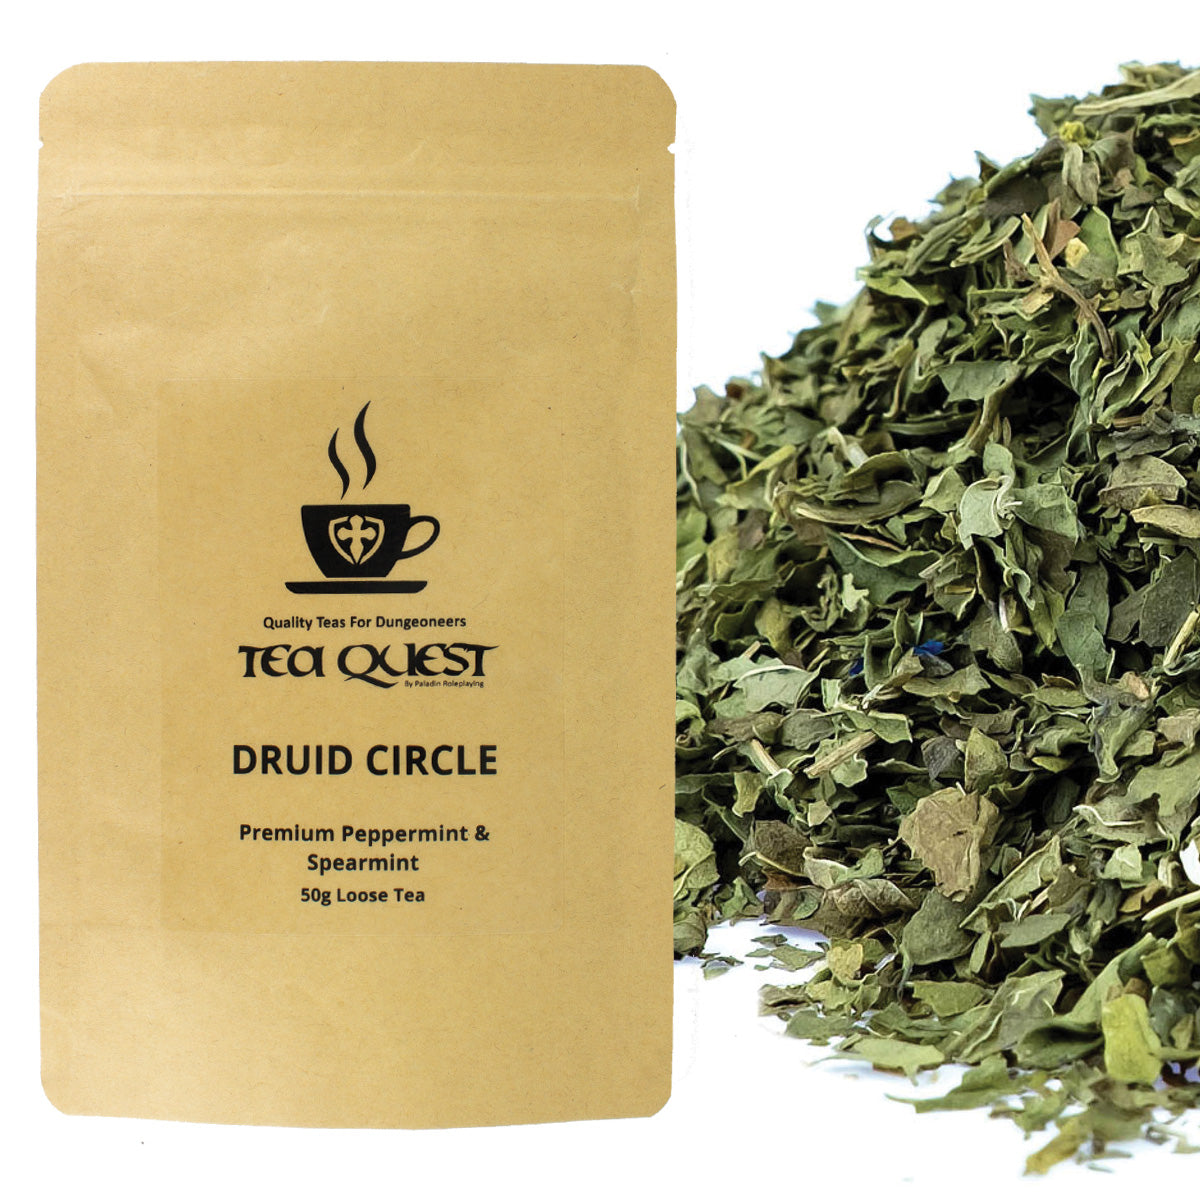 'Druids's Circle' Mint Tea